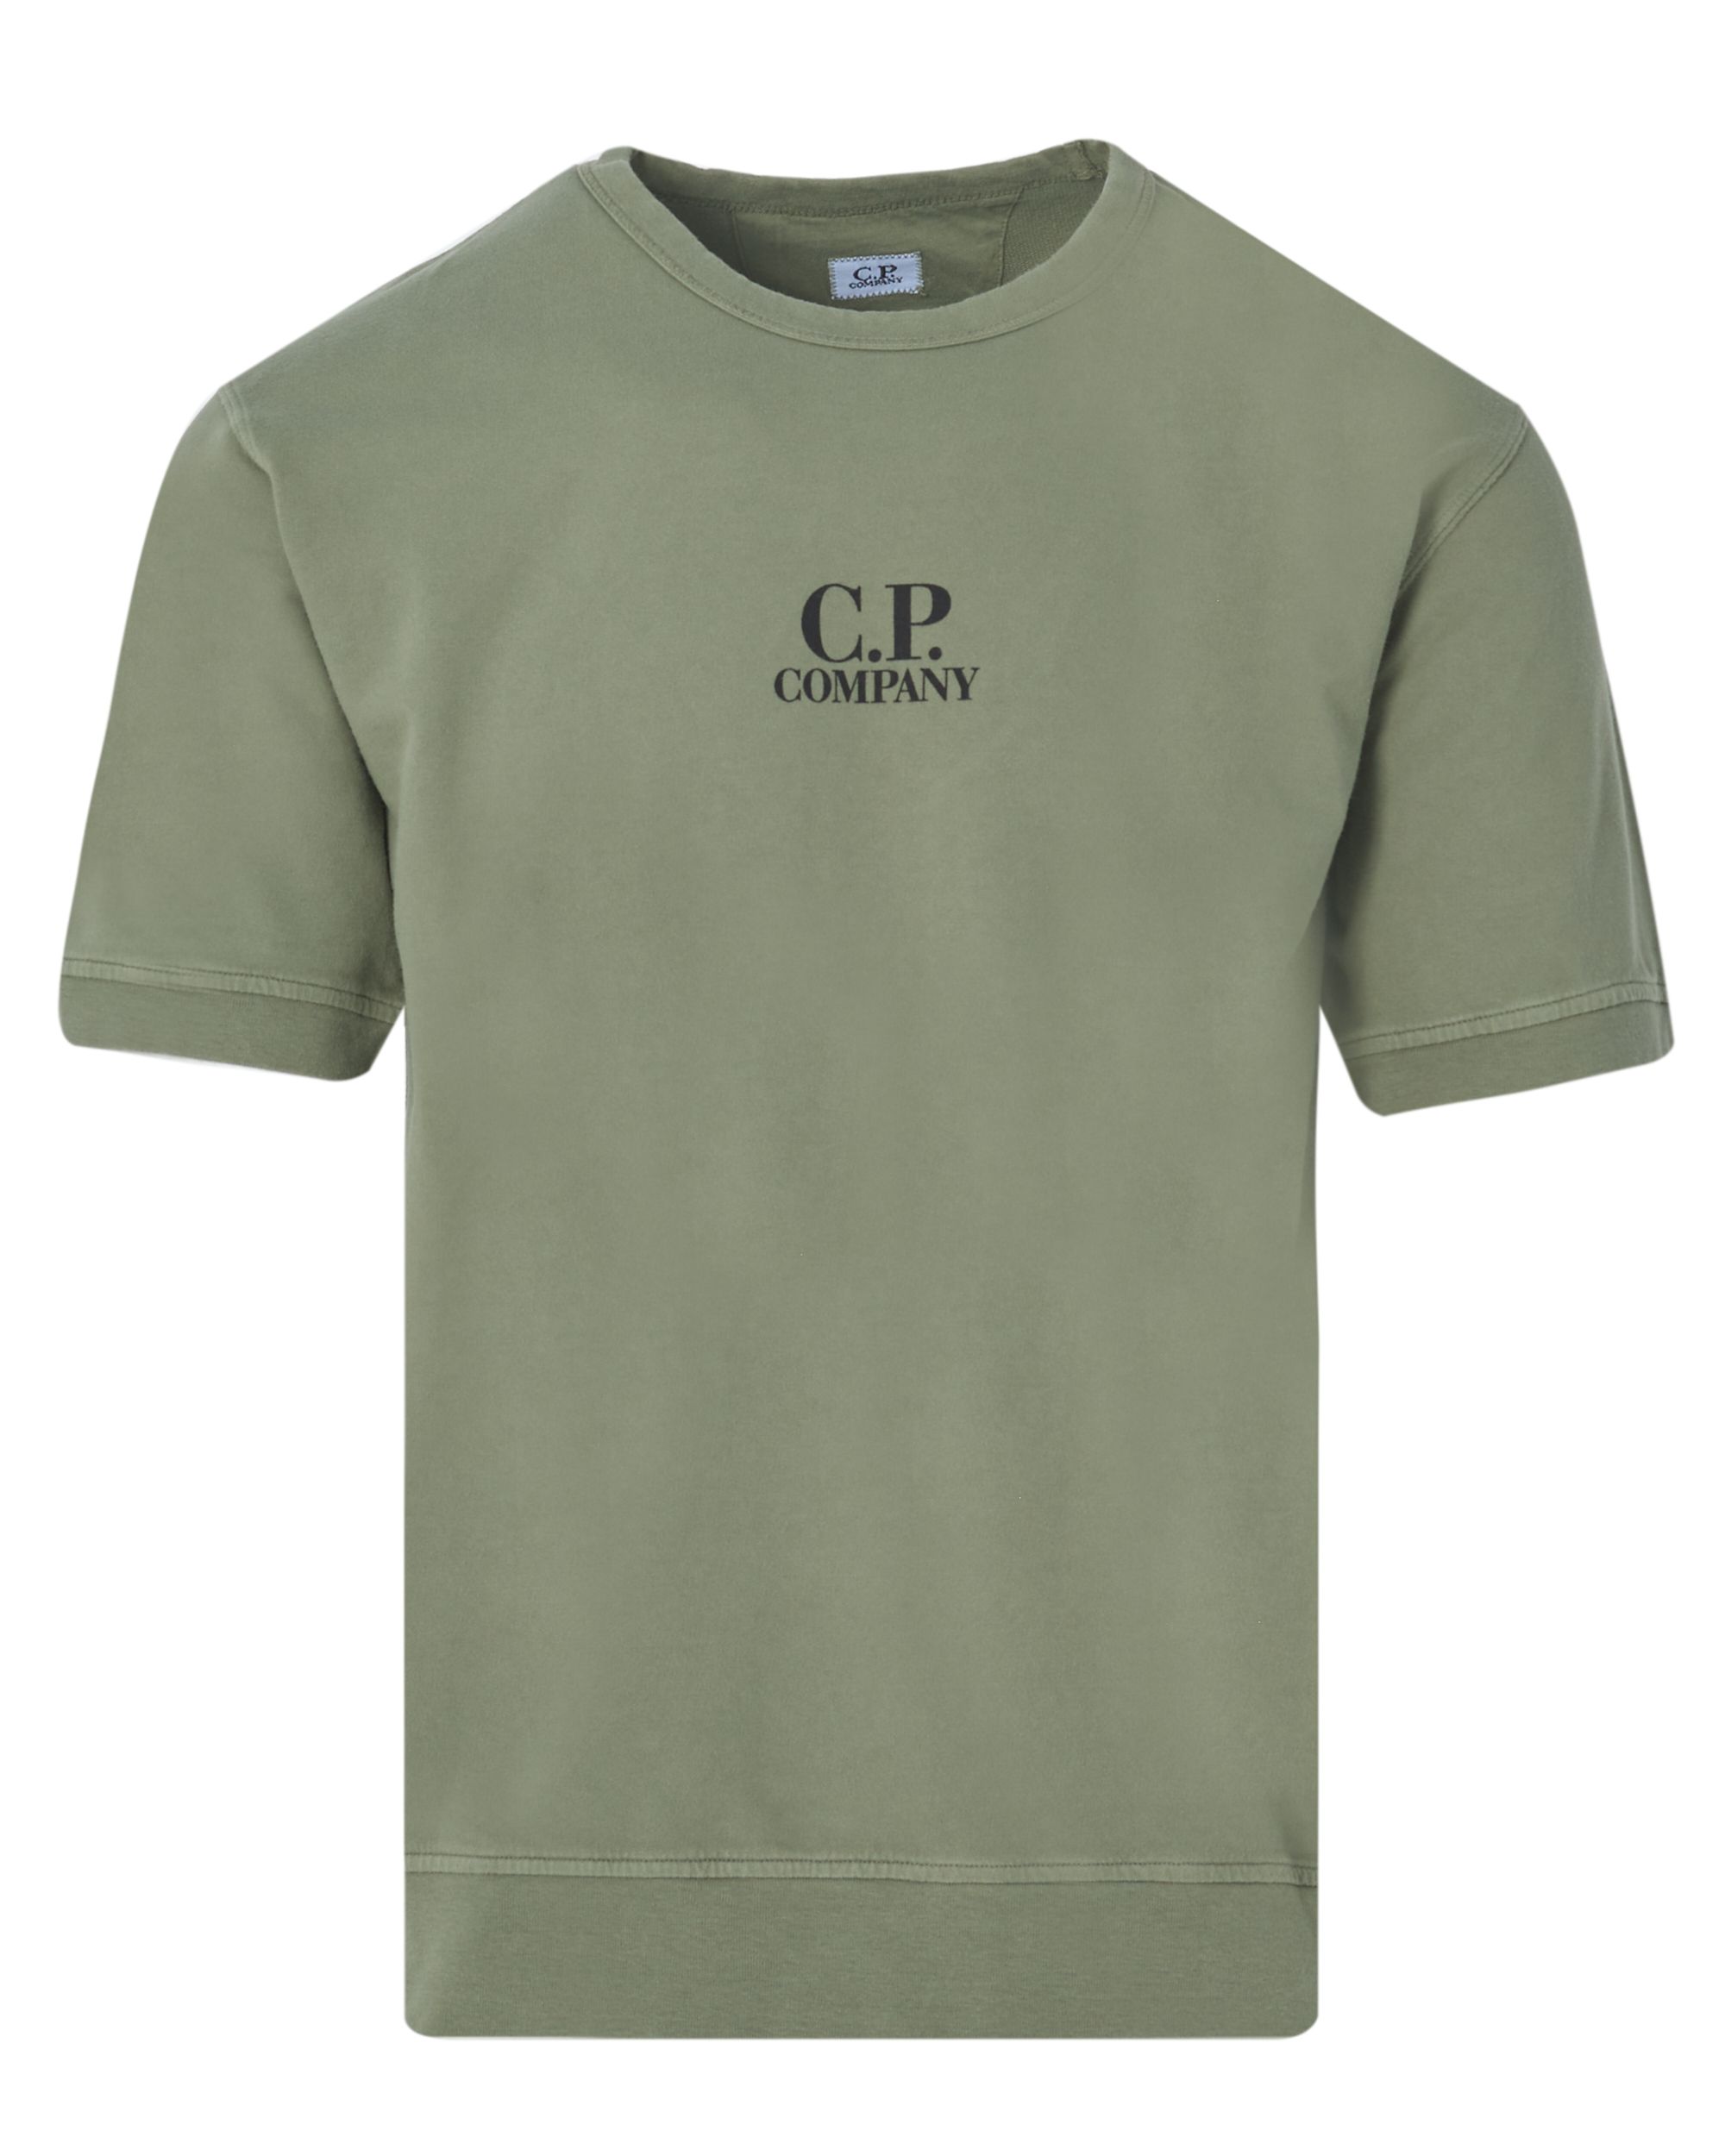 C.P Company T-shirt KM Groen 082489-001-L